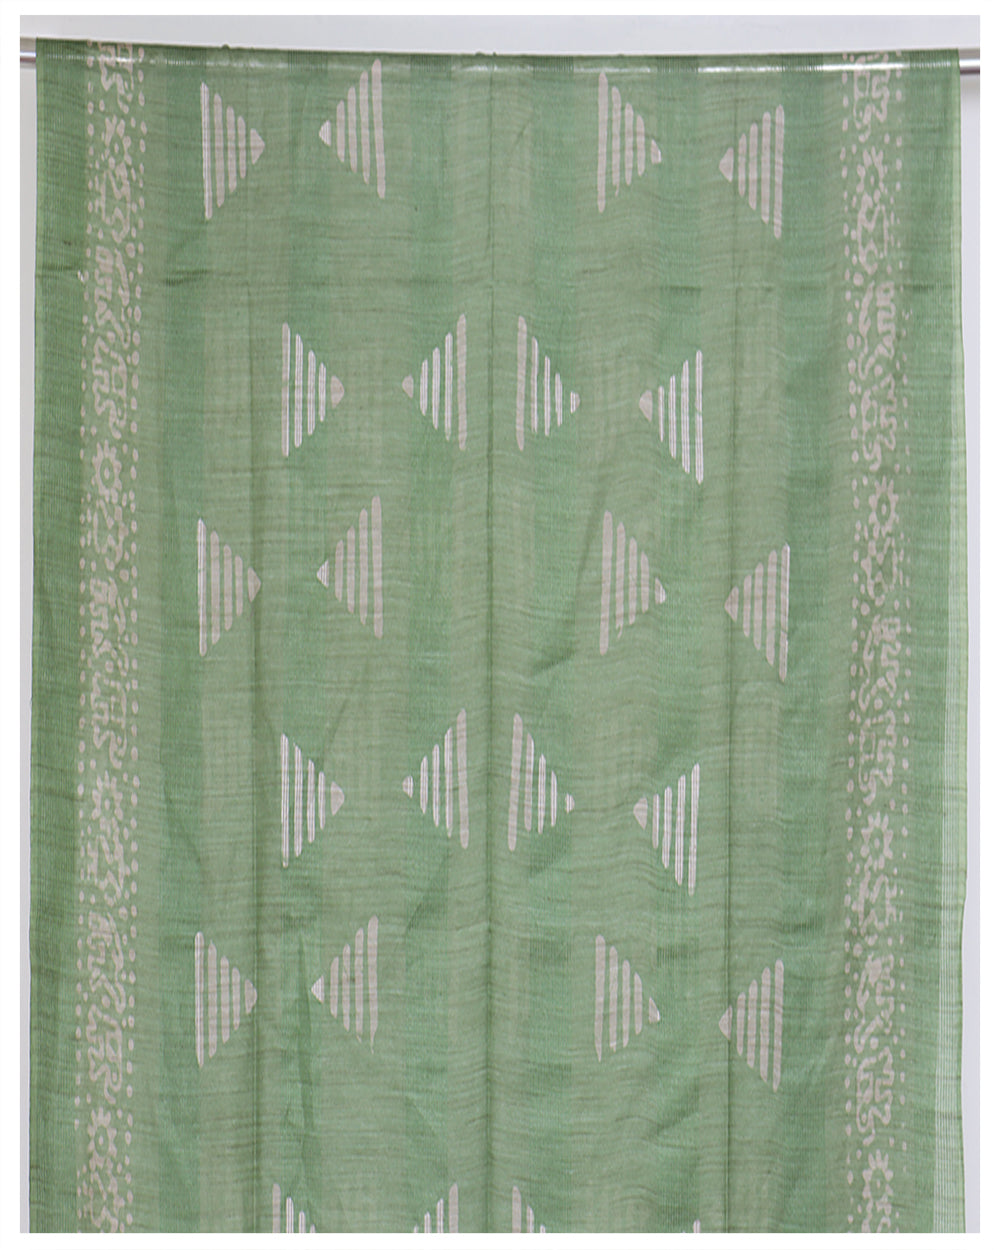 Moss Green Color Weaved Batik Tussar Silk Casual Wear Saree Sarees sreevalsamsilks